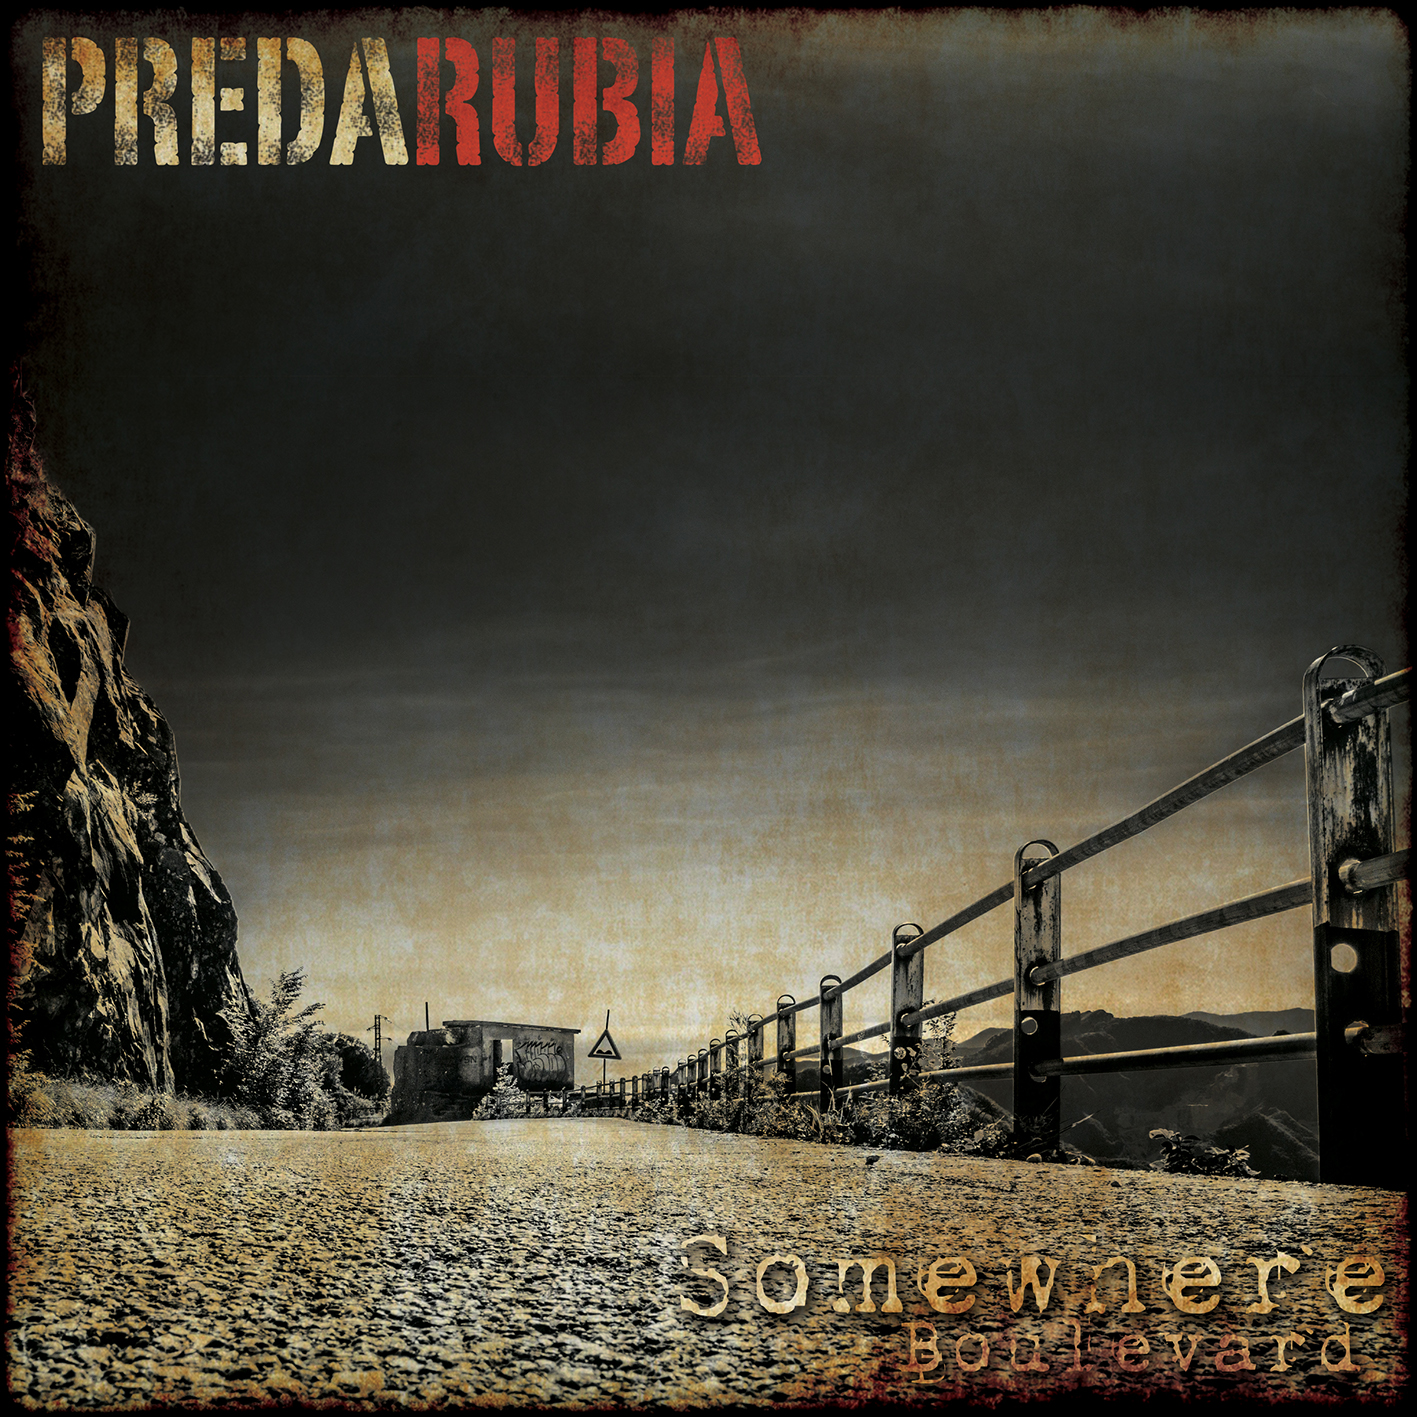 Predarubia - Somewhere Boulevard